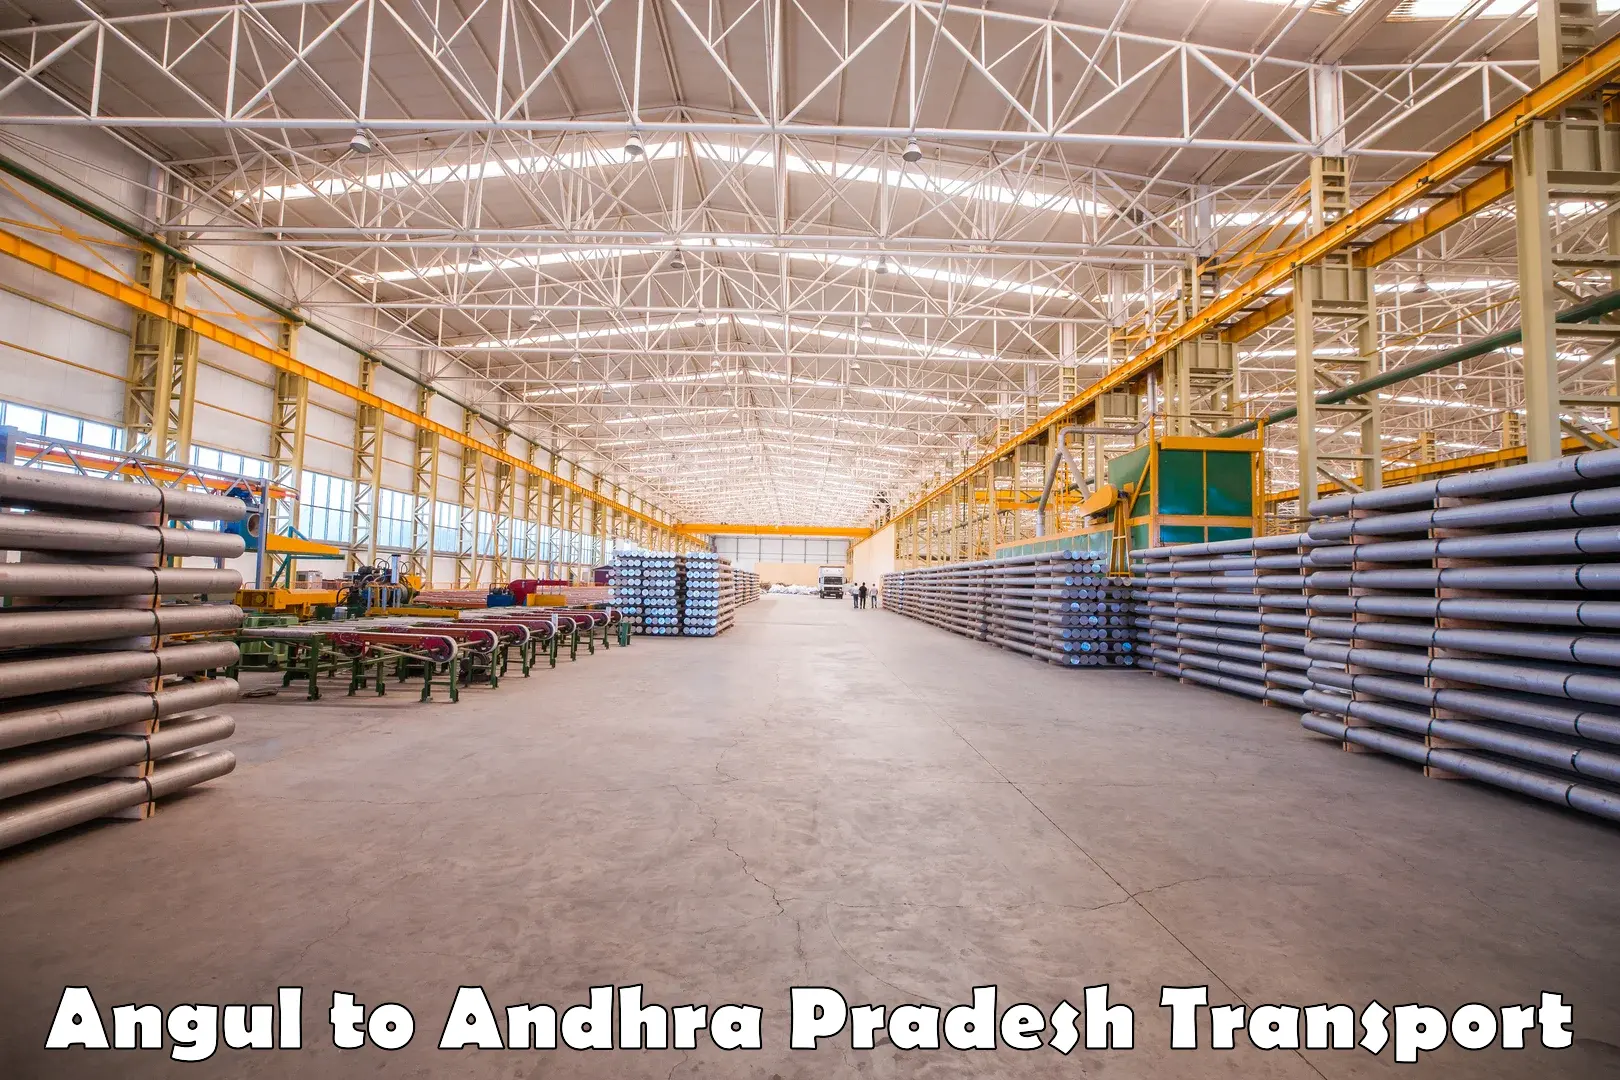 Transport in sharing Angul to Andhra Pradesh